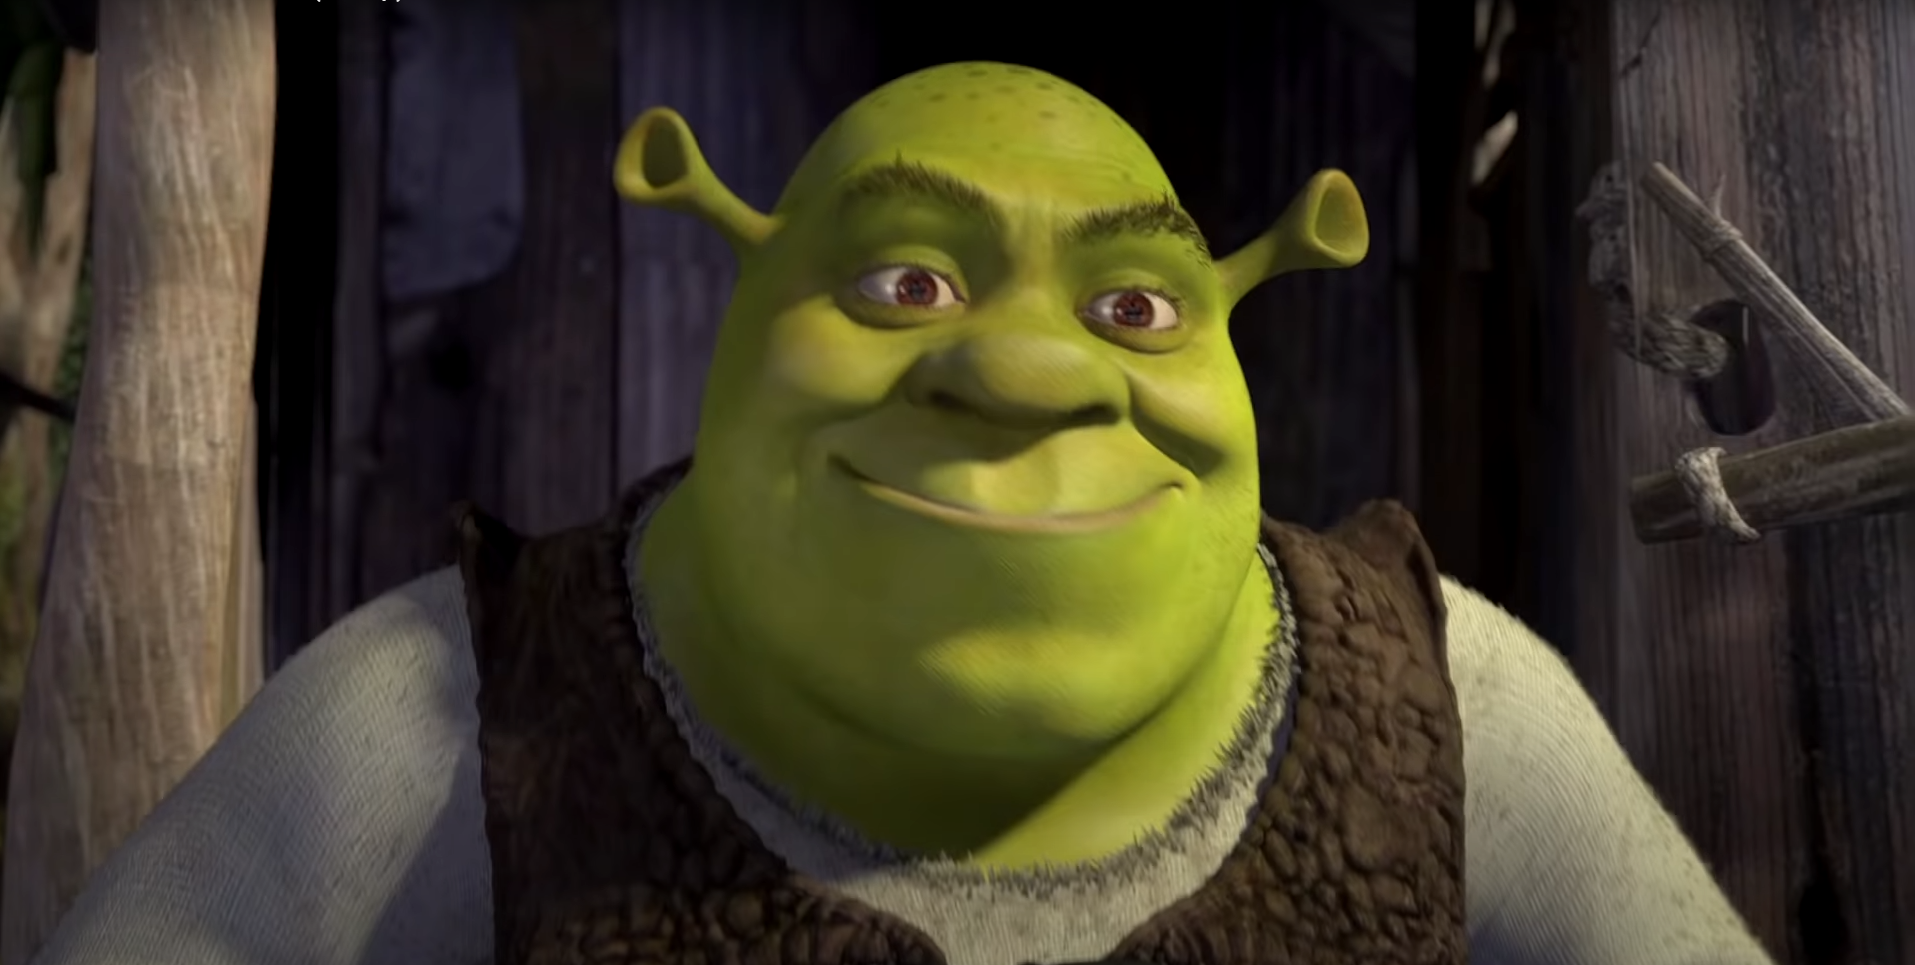 Gamers Alarmed by Appearance of 'Shrek 5' in Their Steam Libraries